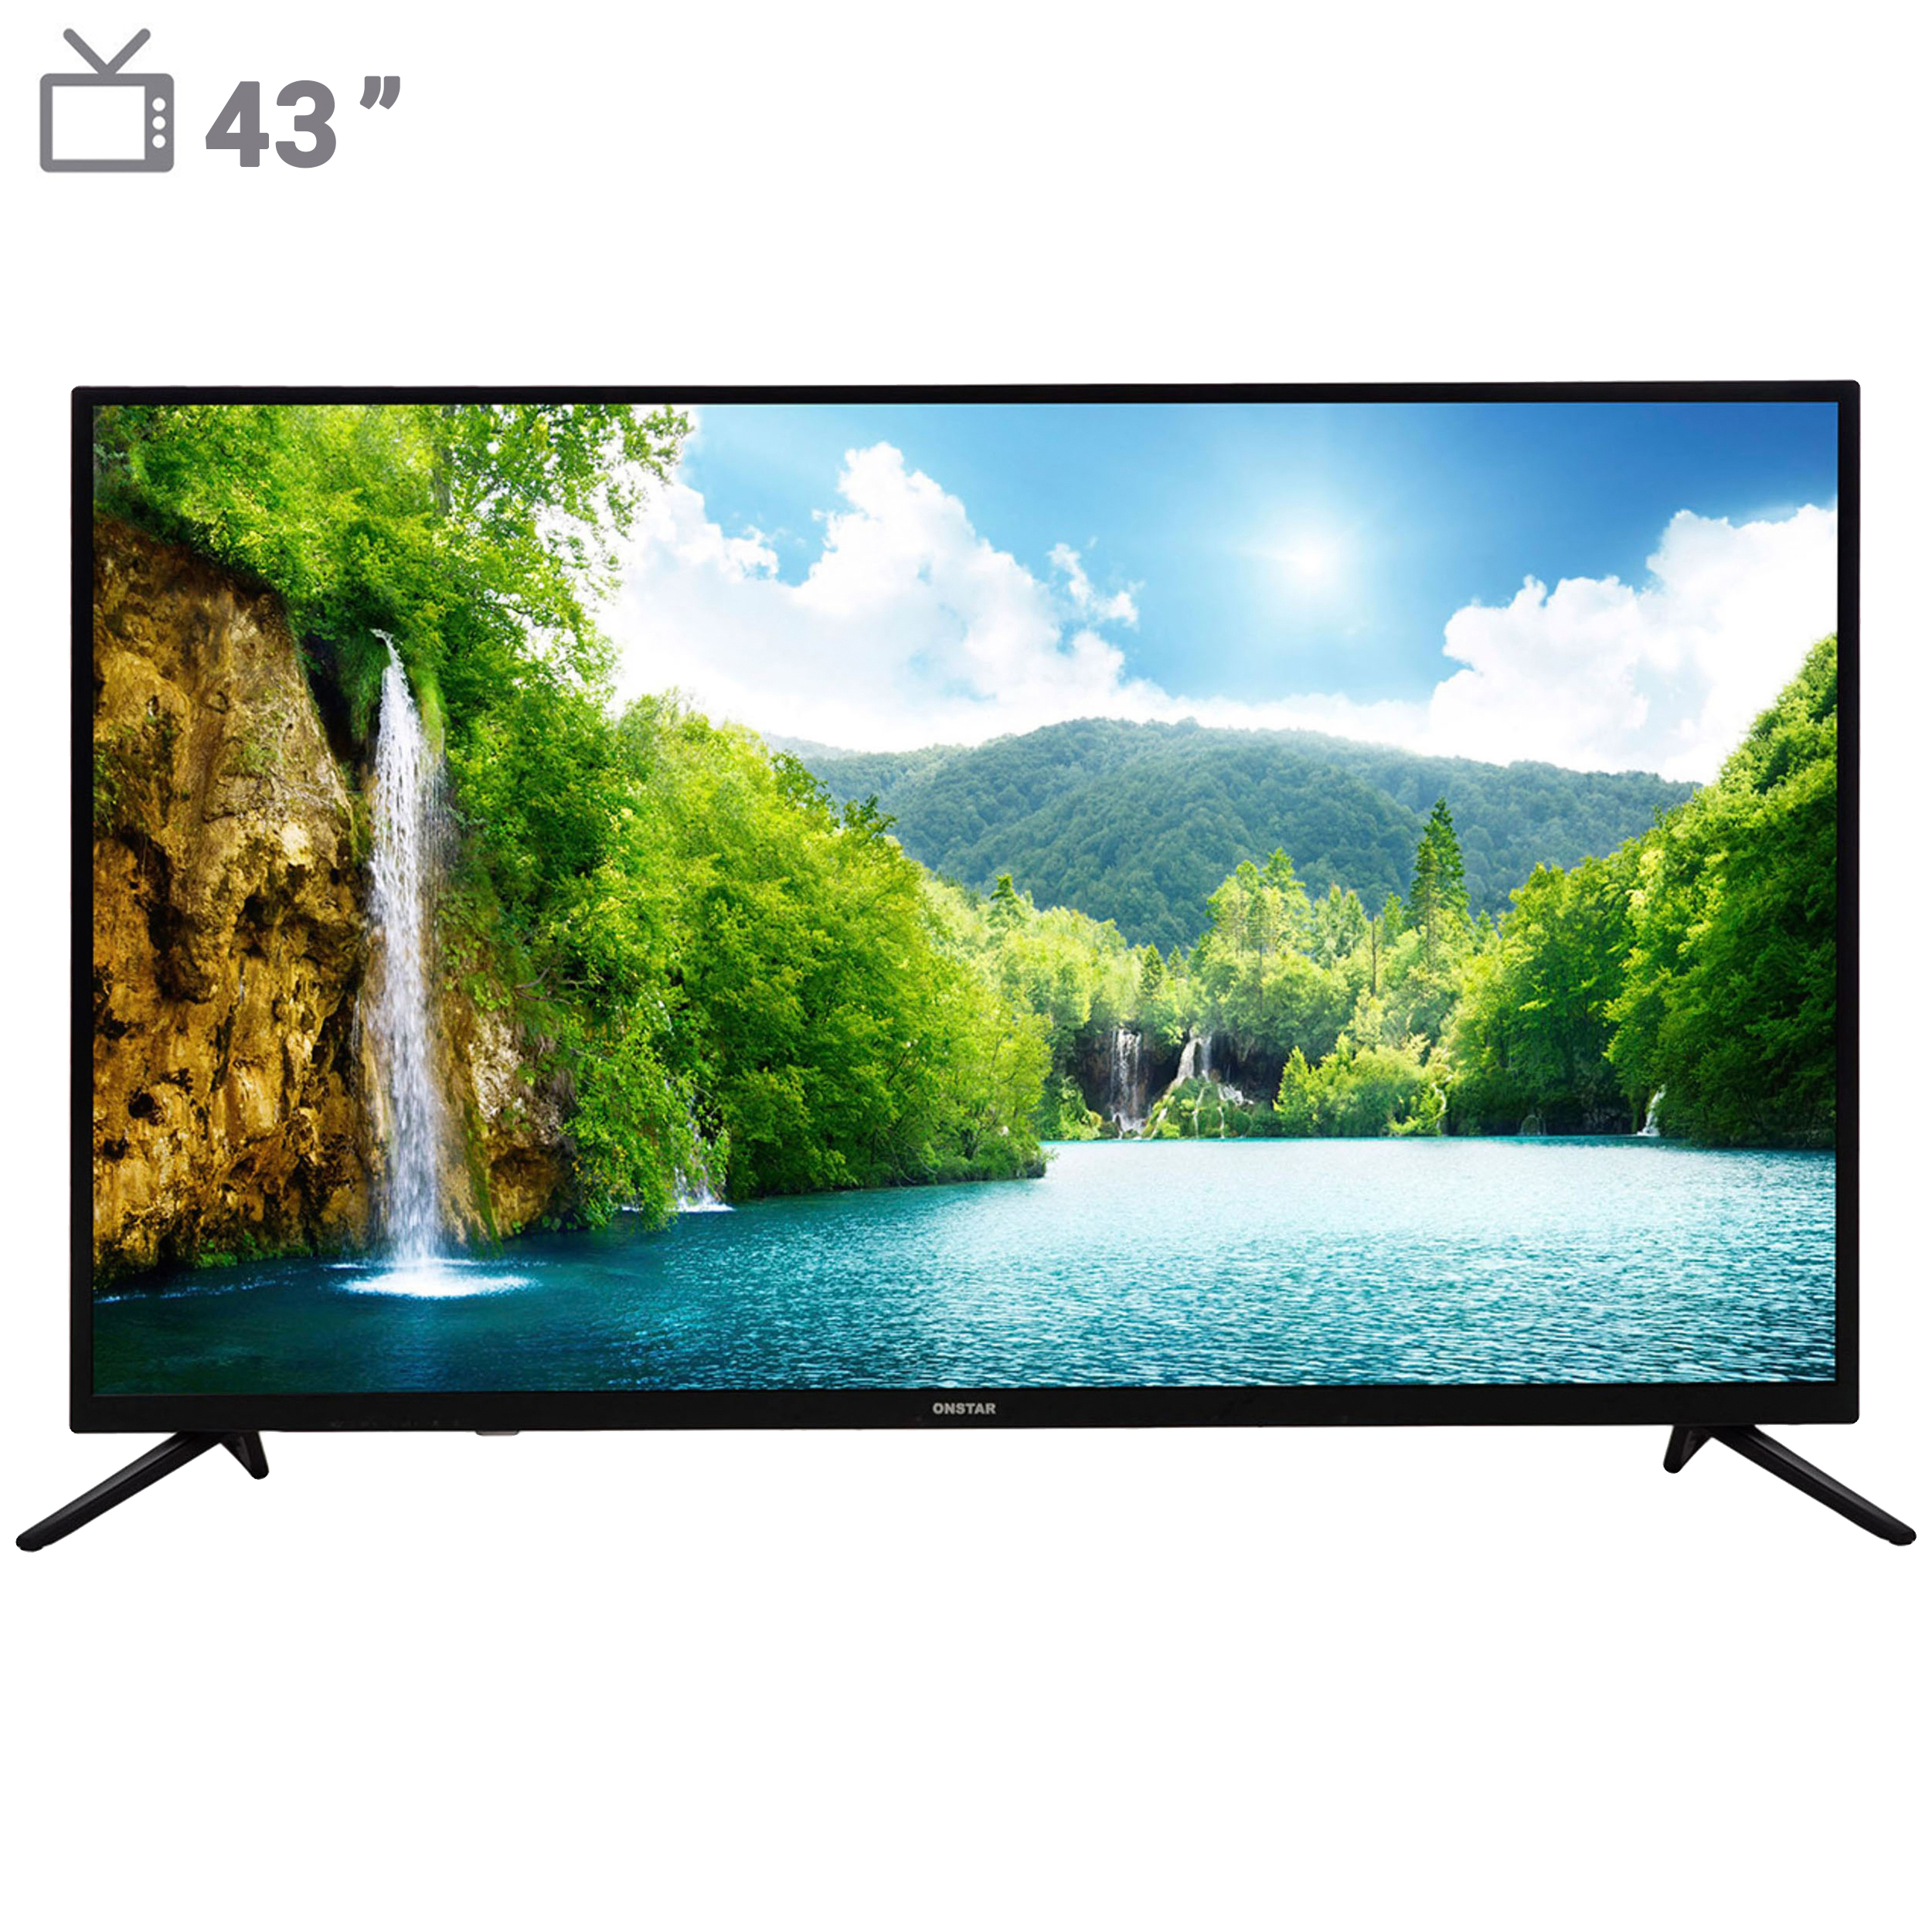 تلویزیون ال ای دی آنستار مدل OS43N9200 سایز 43 اینچ